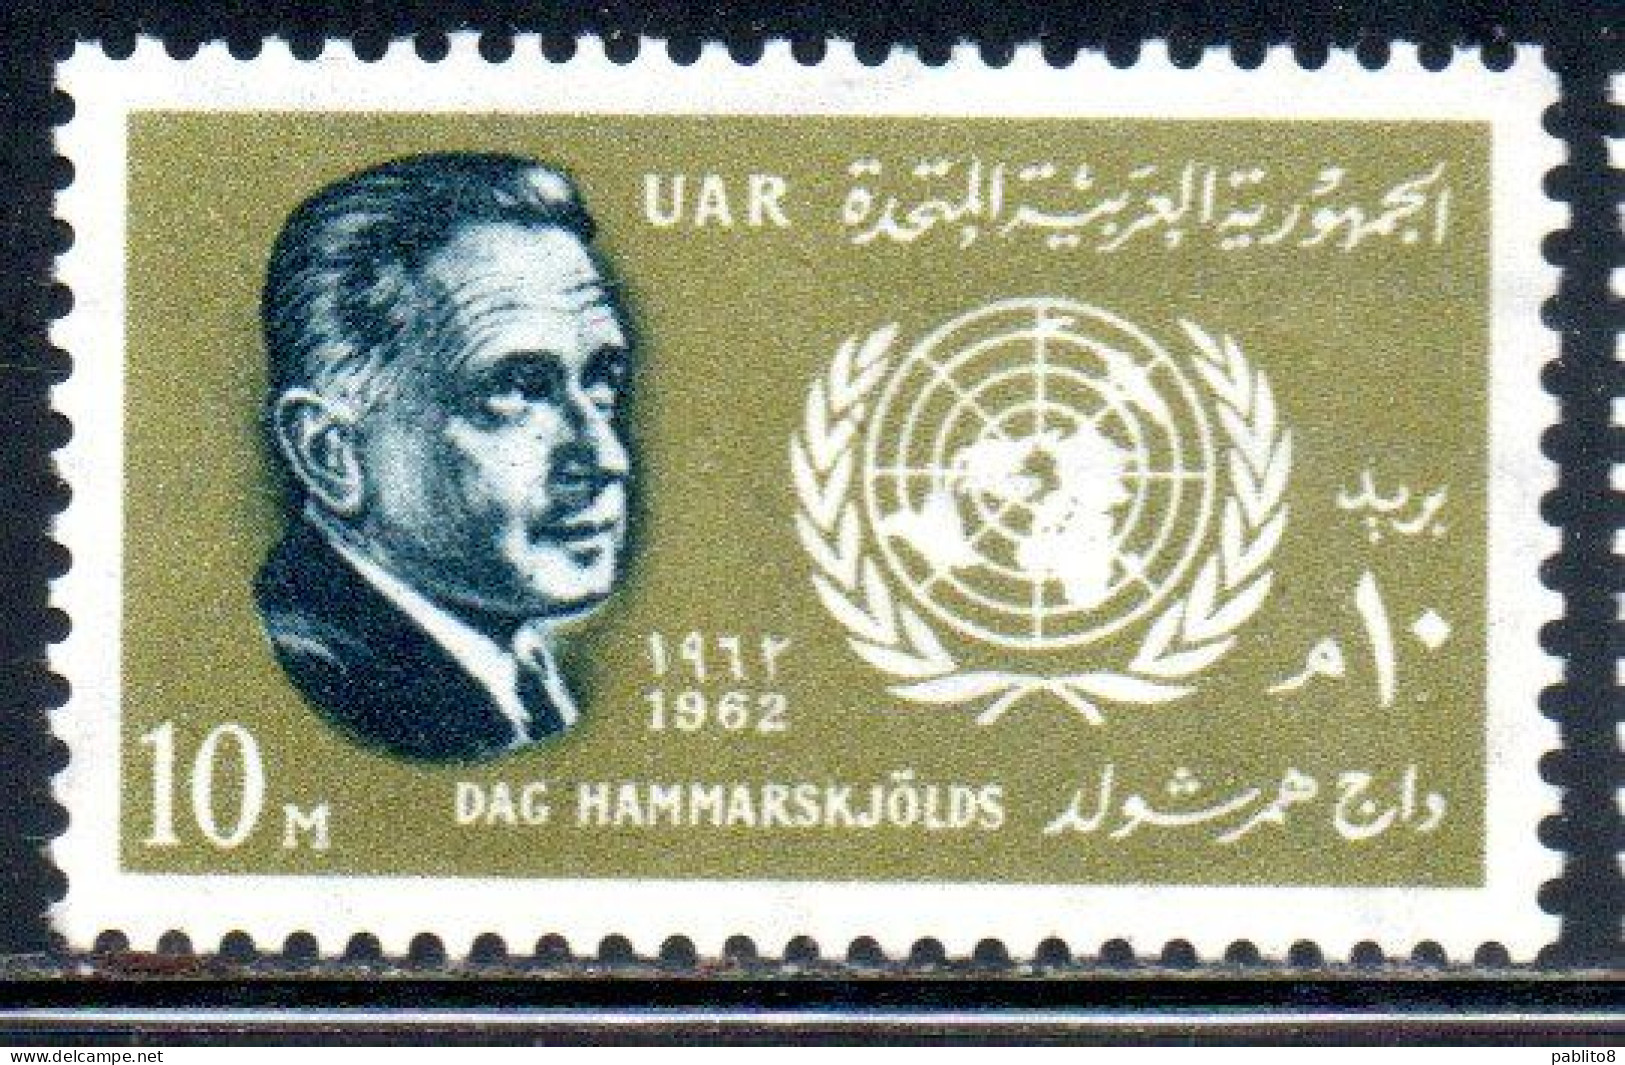 UAR EGYPT EGITTO 1962 DAG HAMMARSKJOLD SECRETARY GENERAL OF THE UN ONU 10m MNH - Nuovi